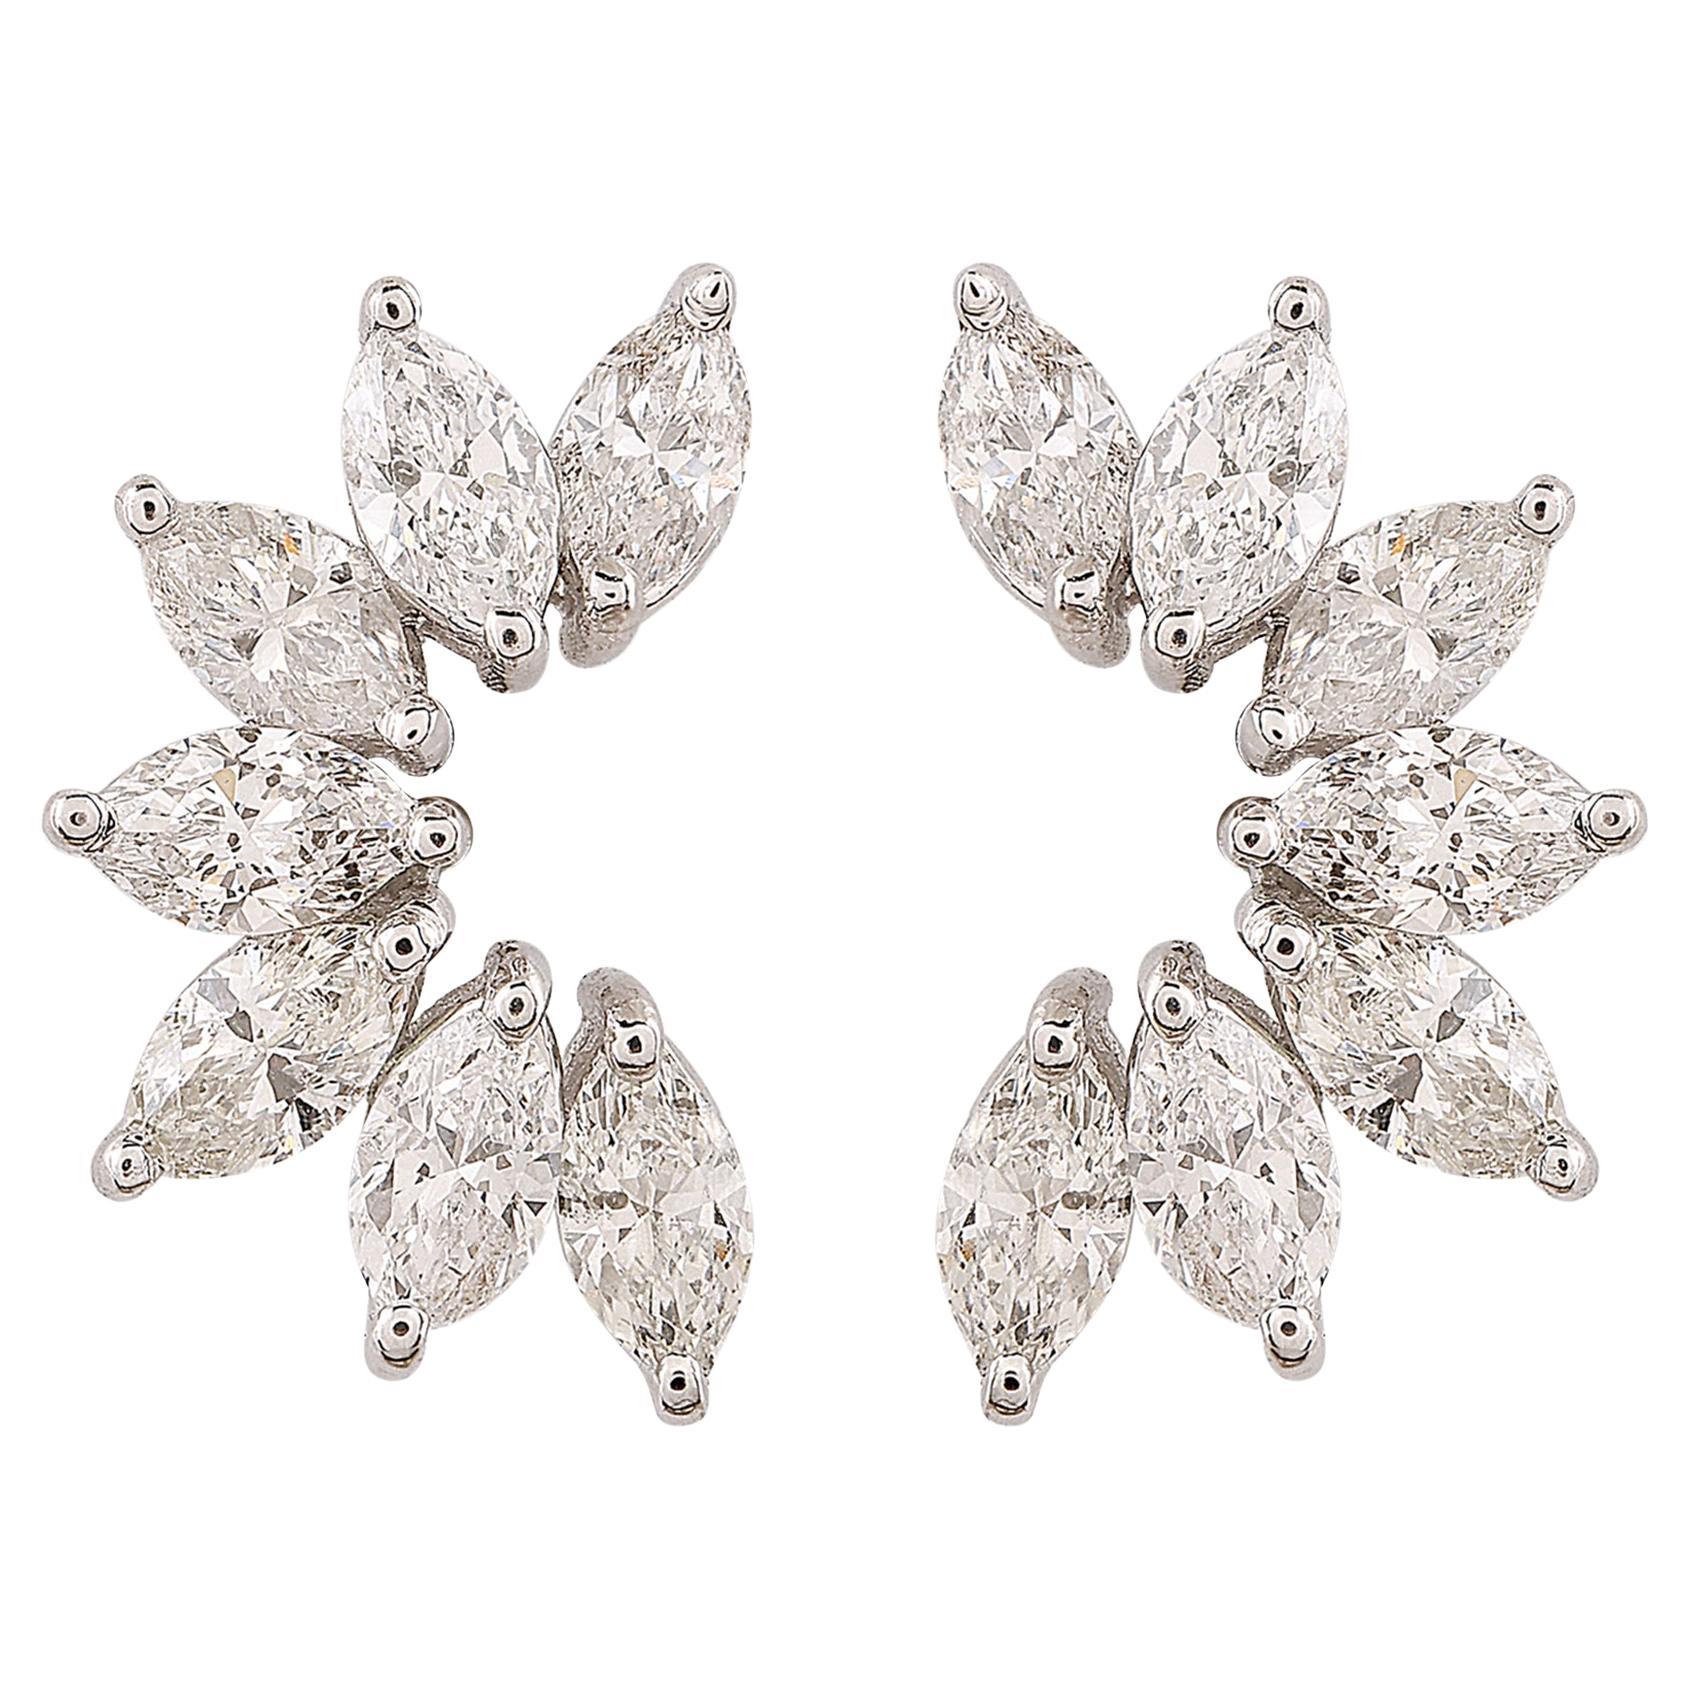 2 Carat SI Clarity HI Color Marquise Diamond Stud Earrings 18 Karat White Gold